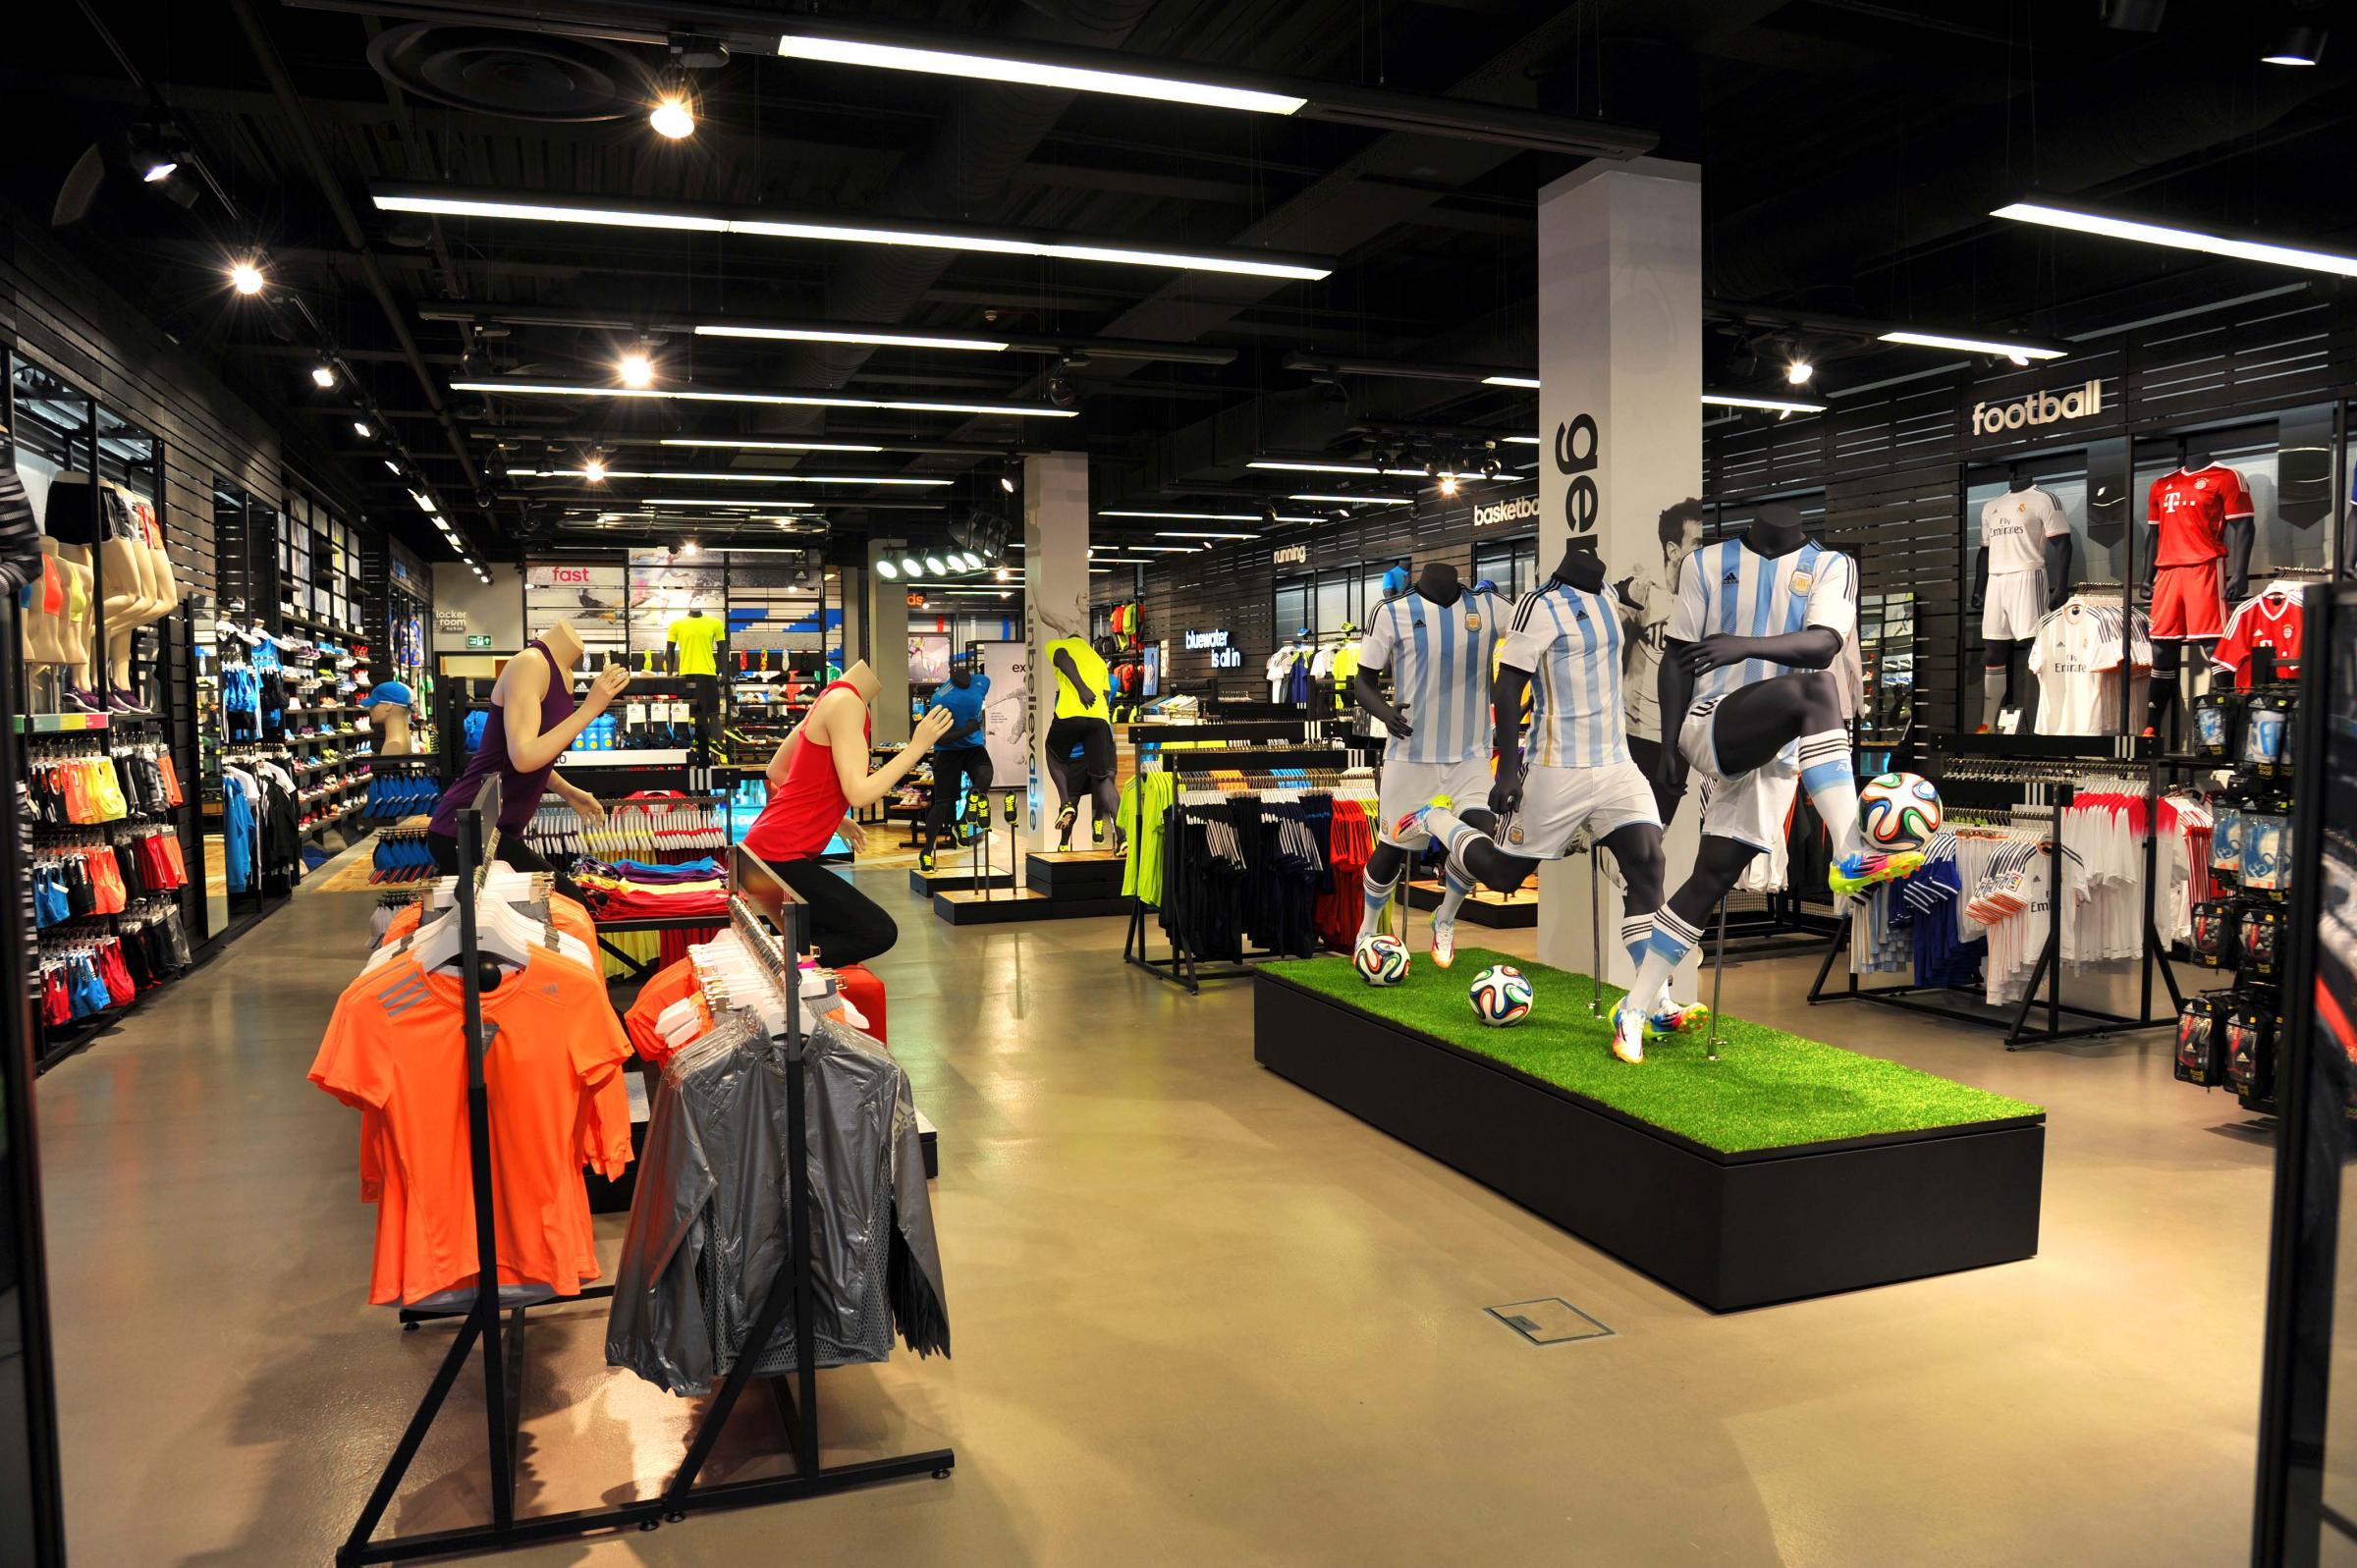 Kiss FM and Premier League stars join fun for European first Adidas concept  store | News Shopper